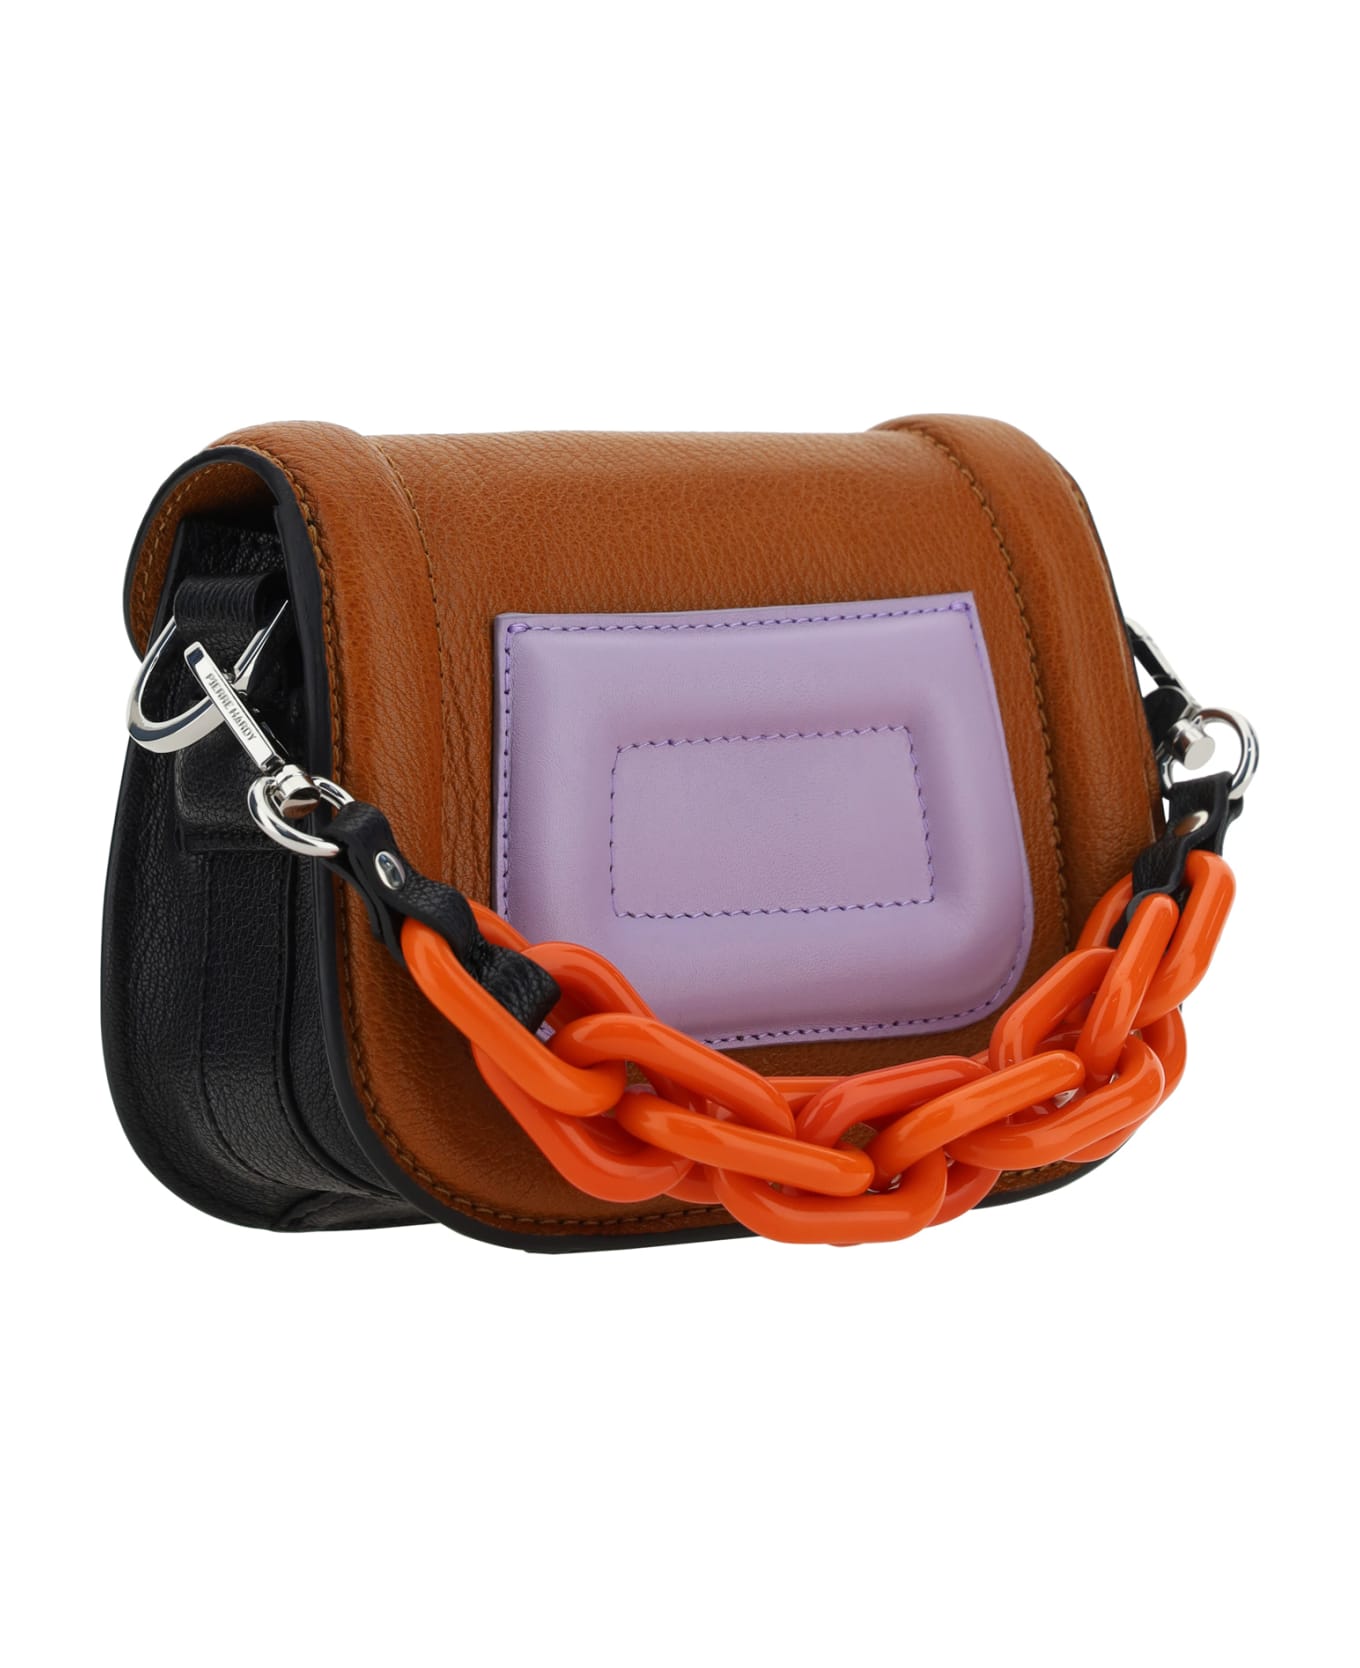 Pierre Hardy Alphaville Handbag - Tan/orange